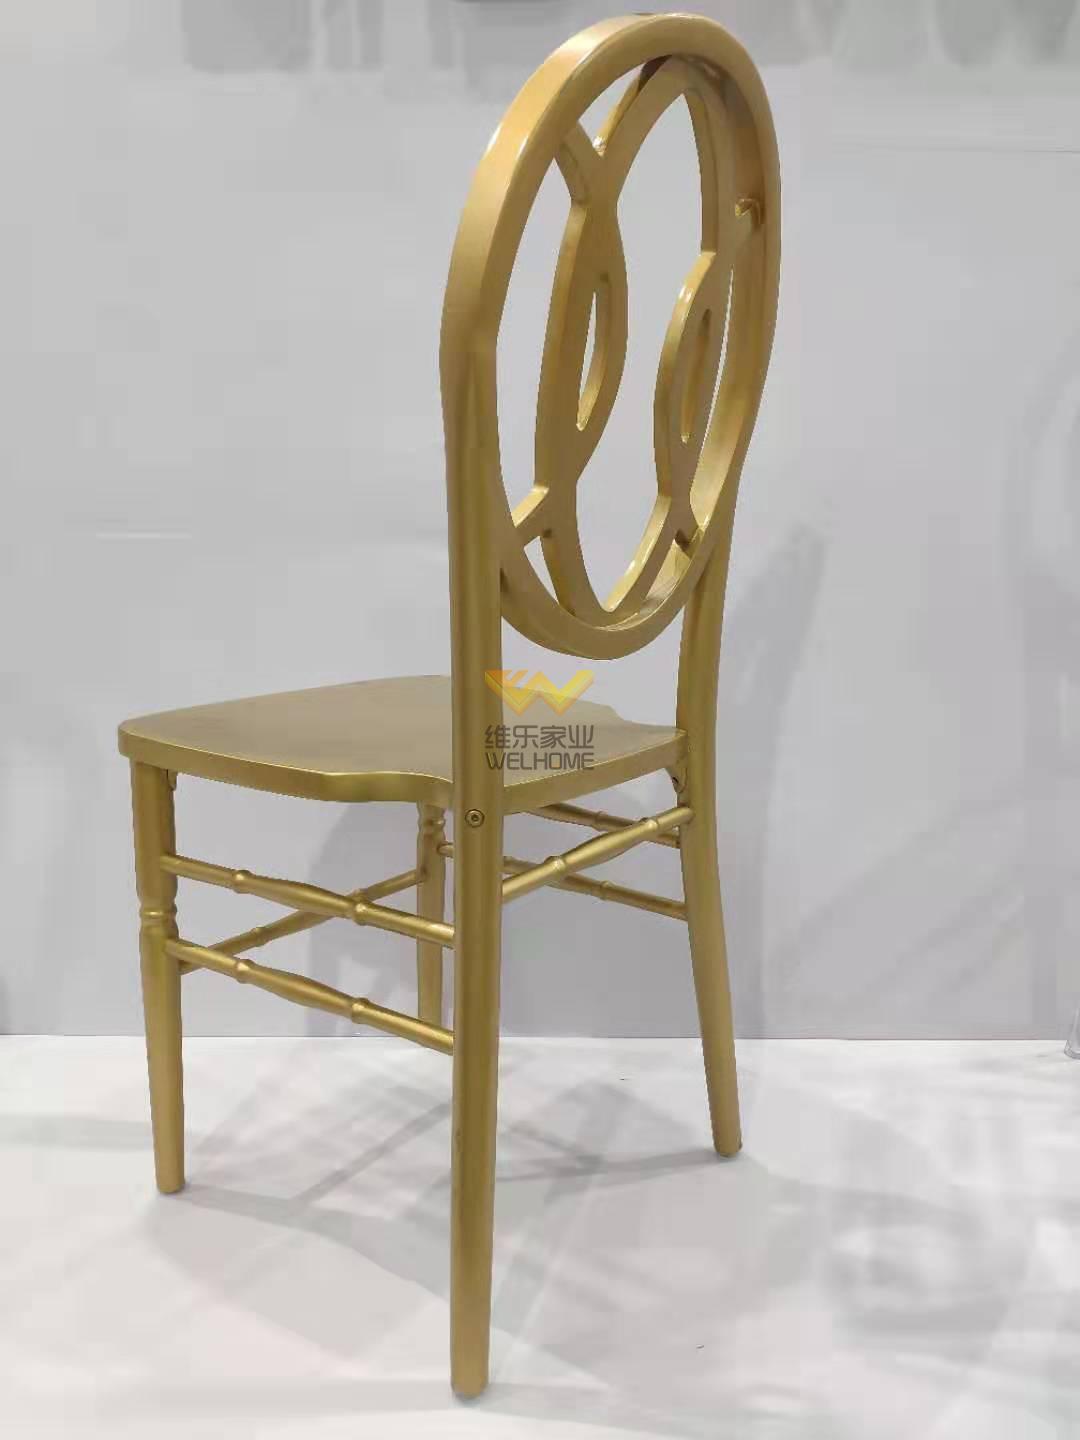 Soild wood phoenix chair for event/restaurant